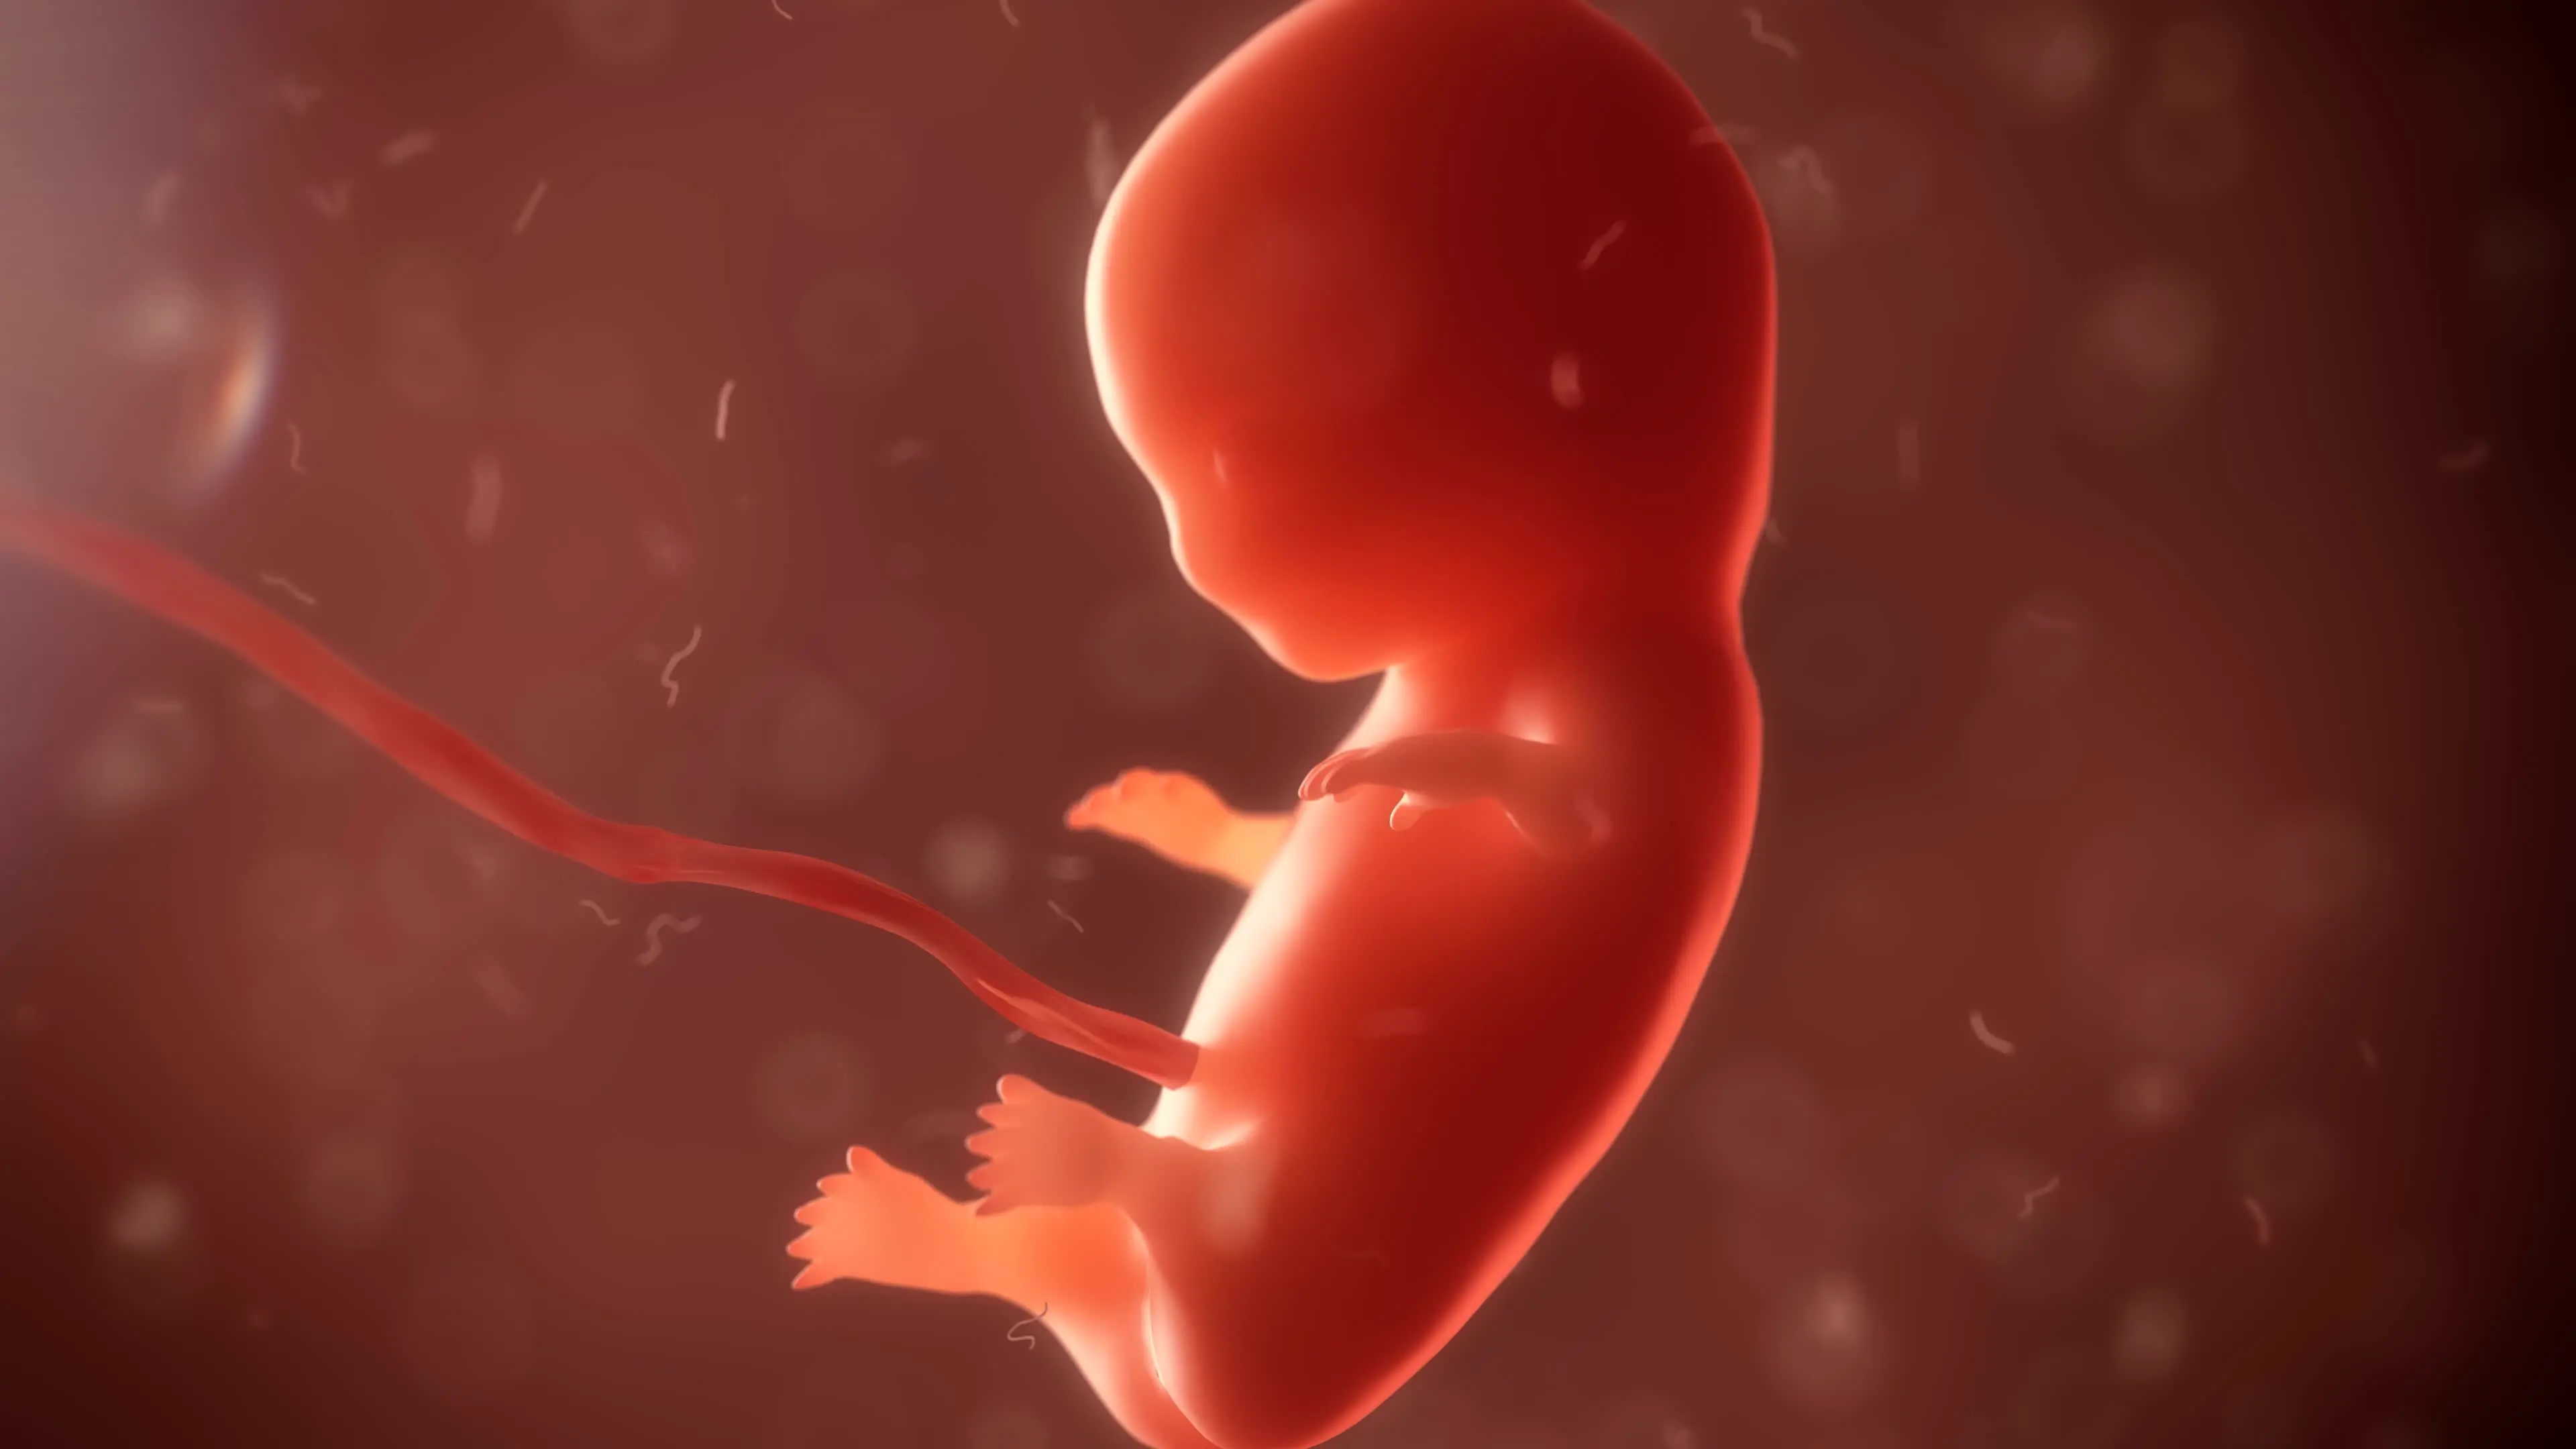 tiny fetus